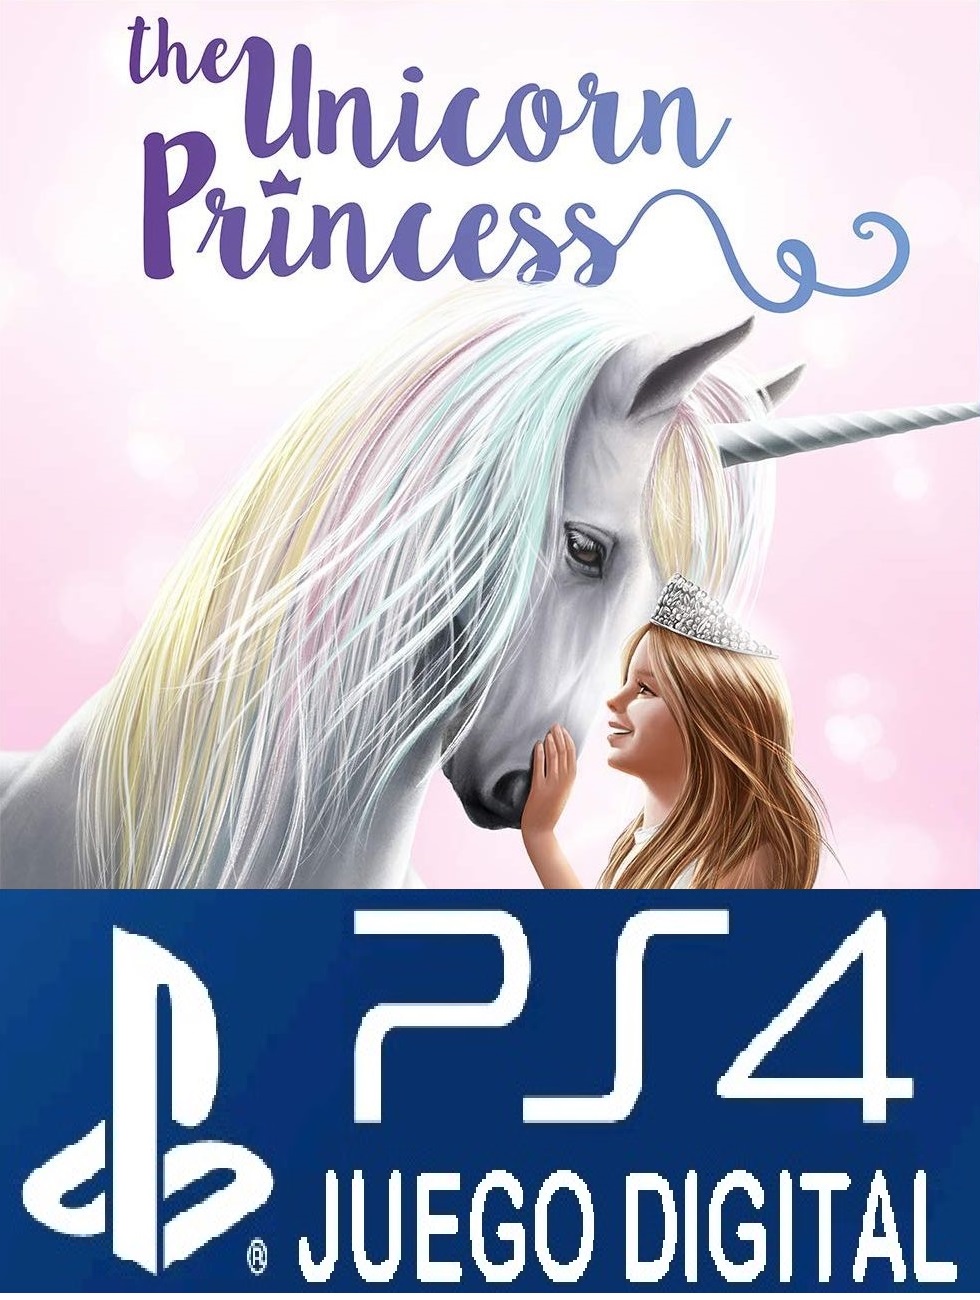 The Unicorn Princess (PS4D)